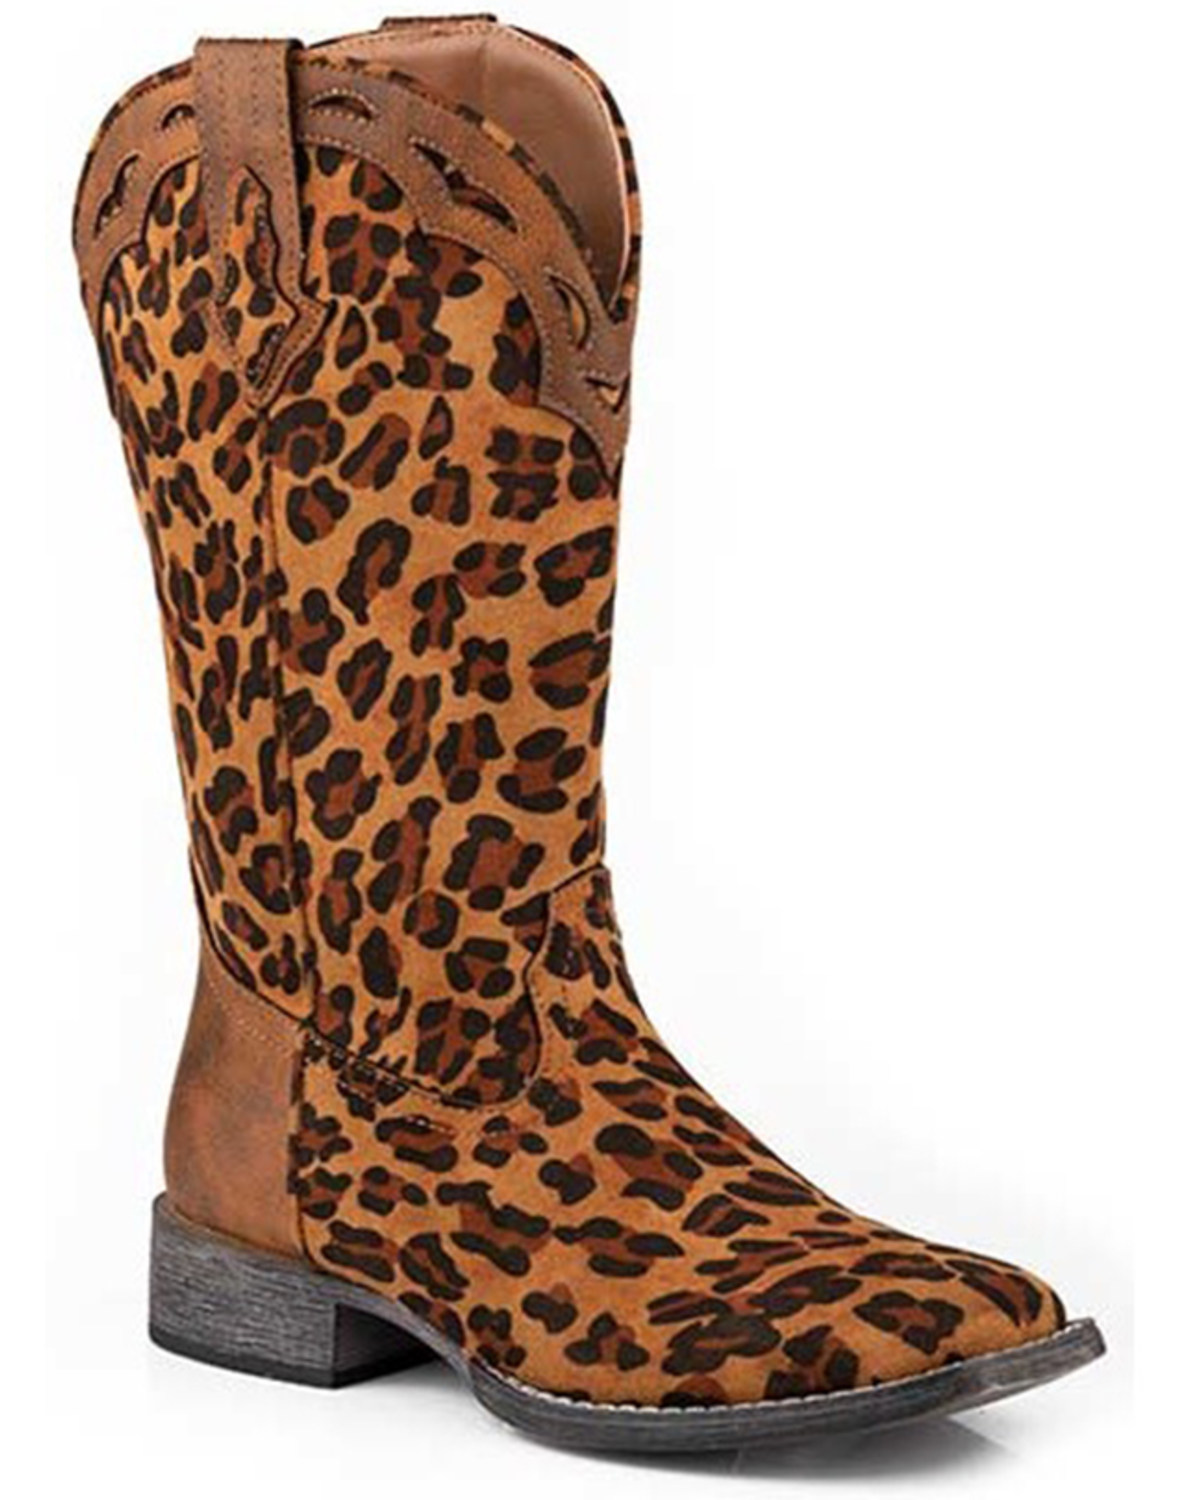 Roper Women's Stella Leopard Print Western Boots - Broad Square Toe